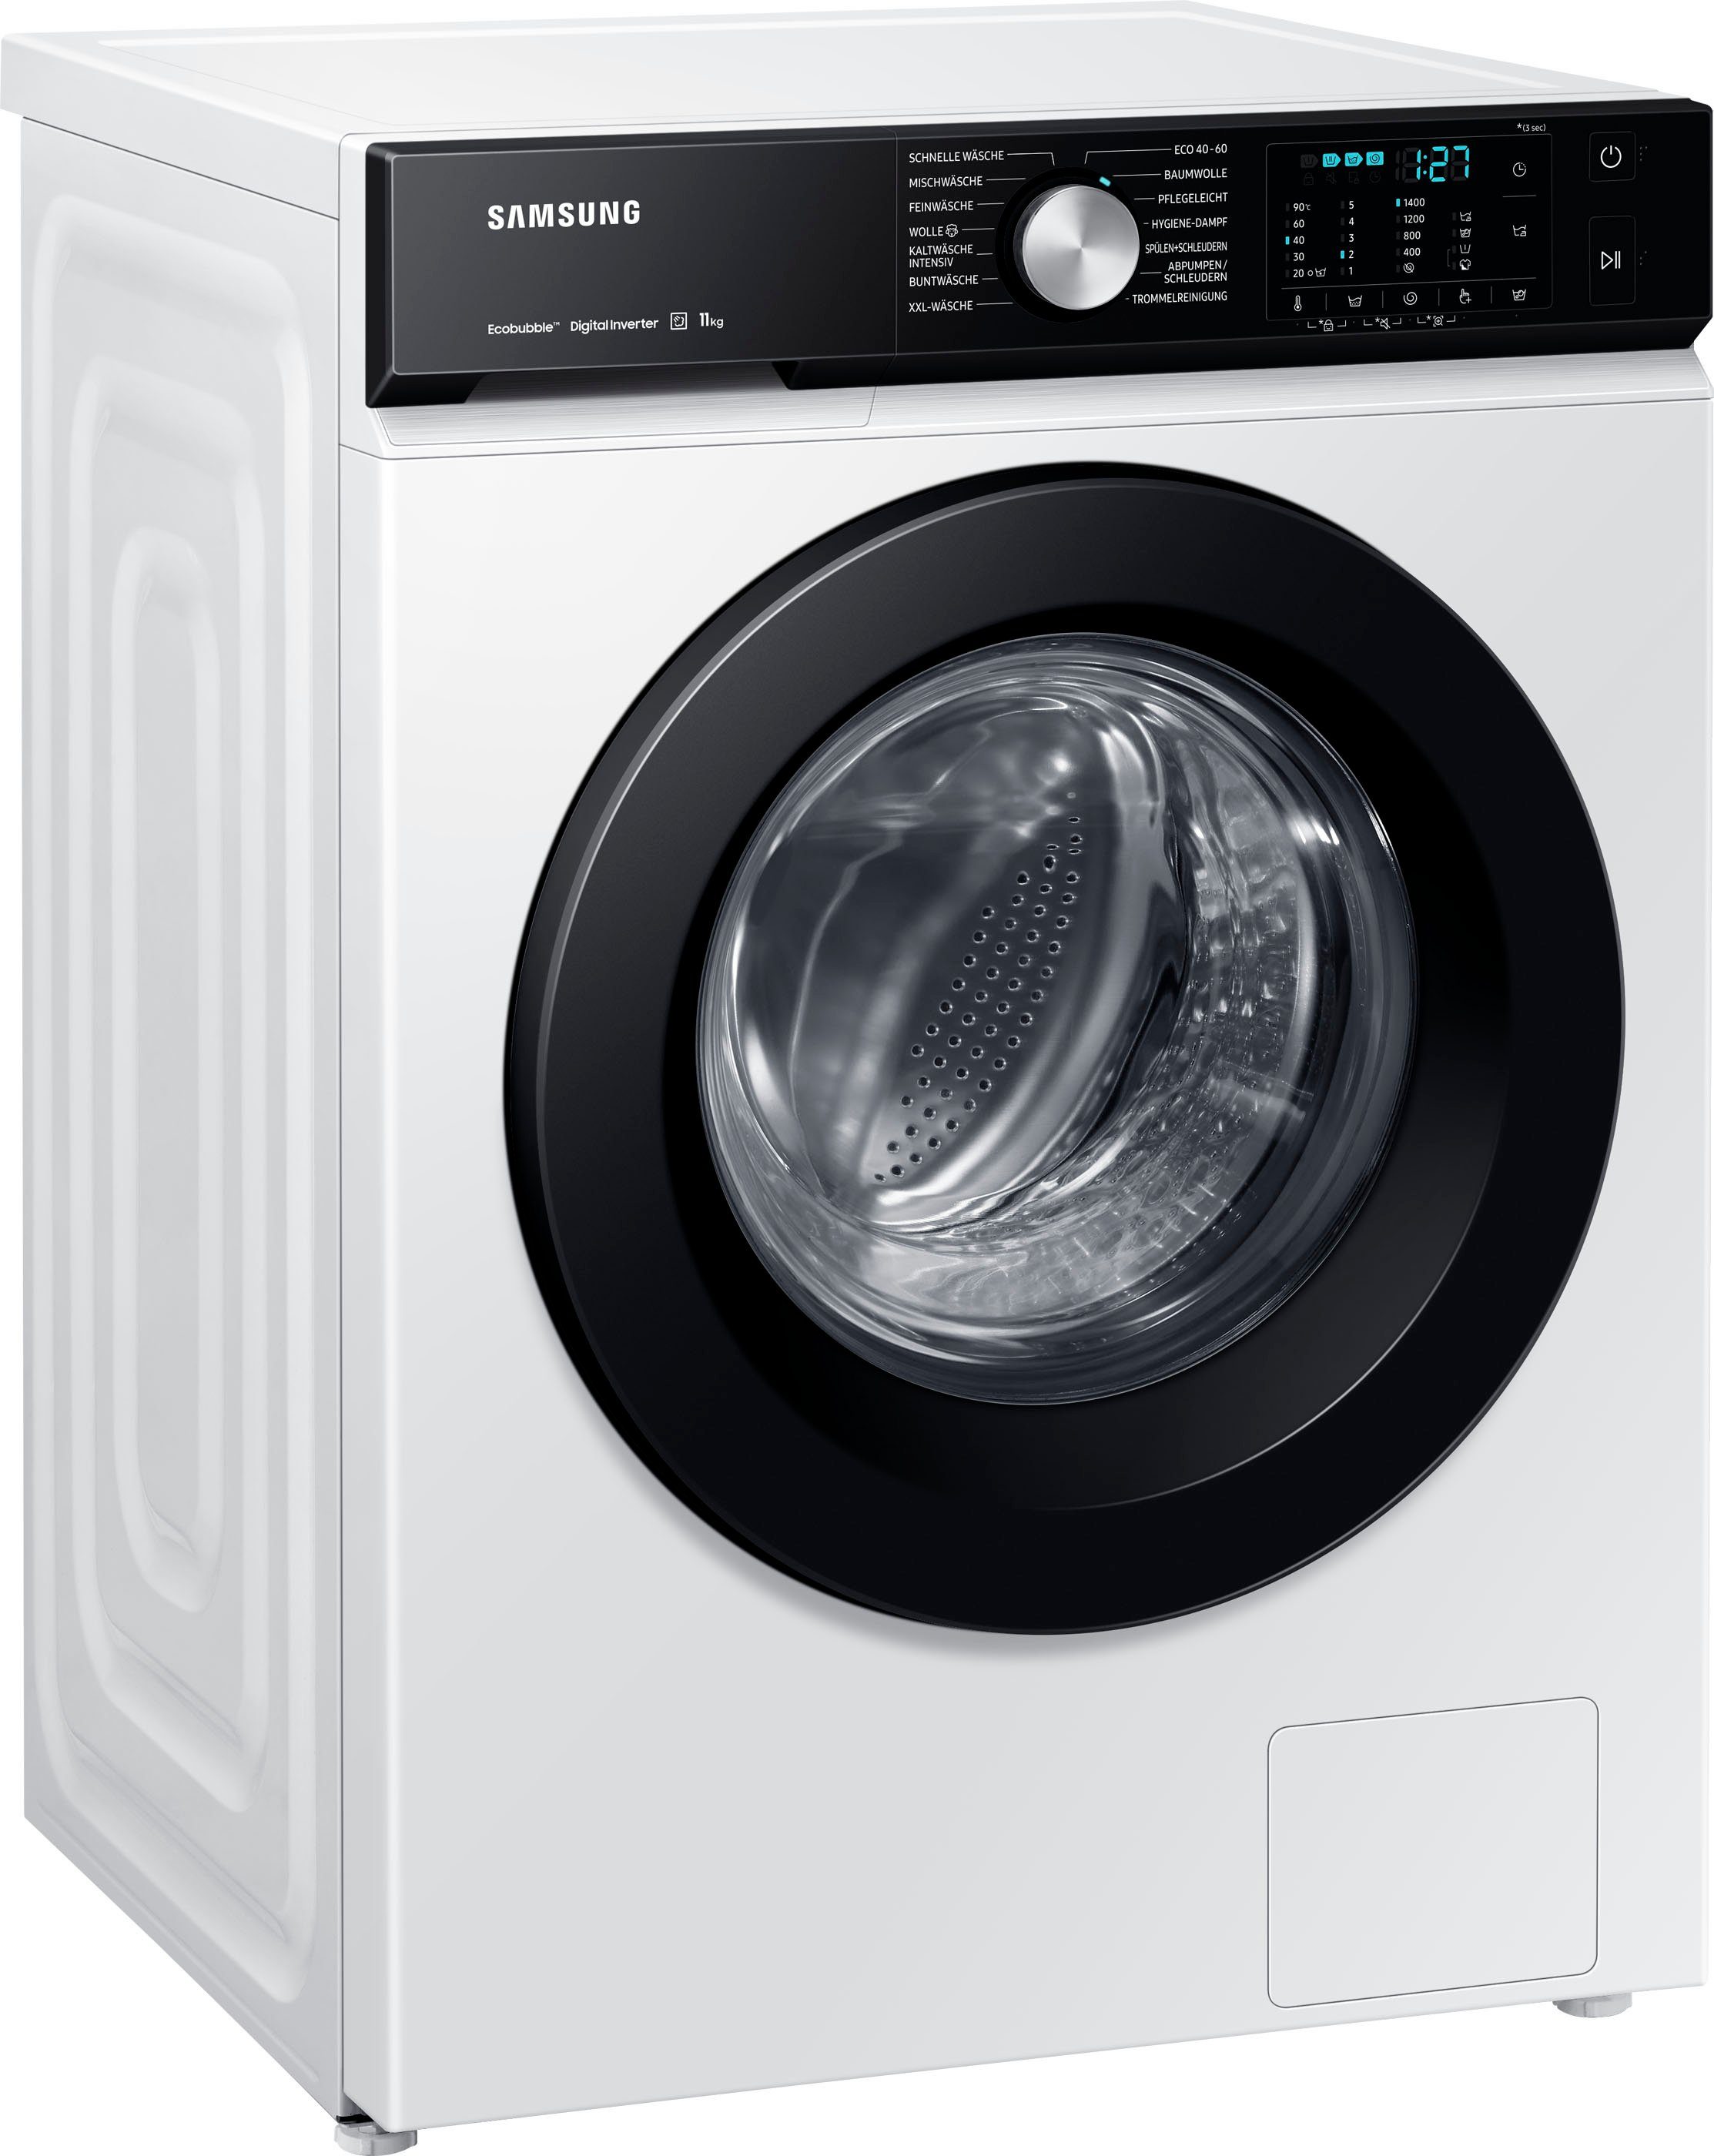 kg, 11 WW1EBBA049AE, Waschmaschine Samsung U/min 1400